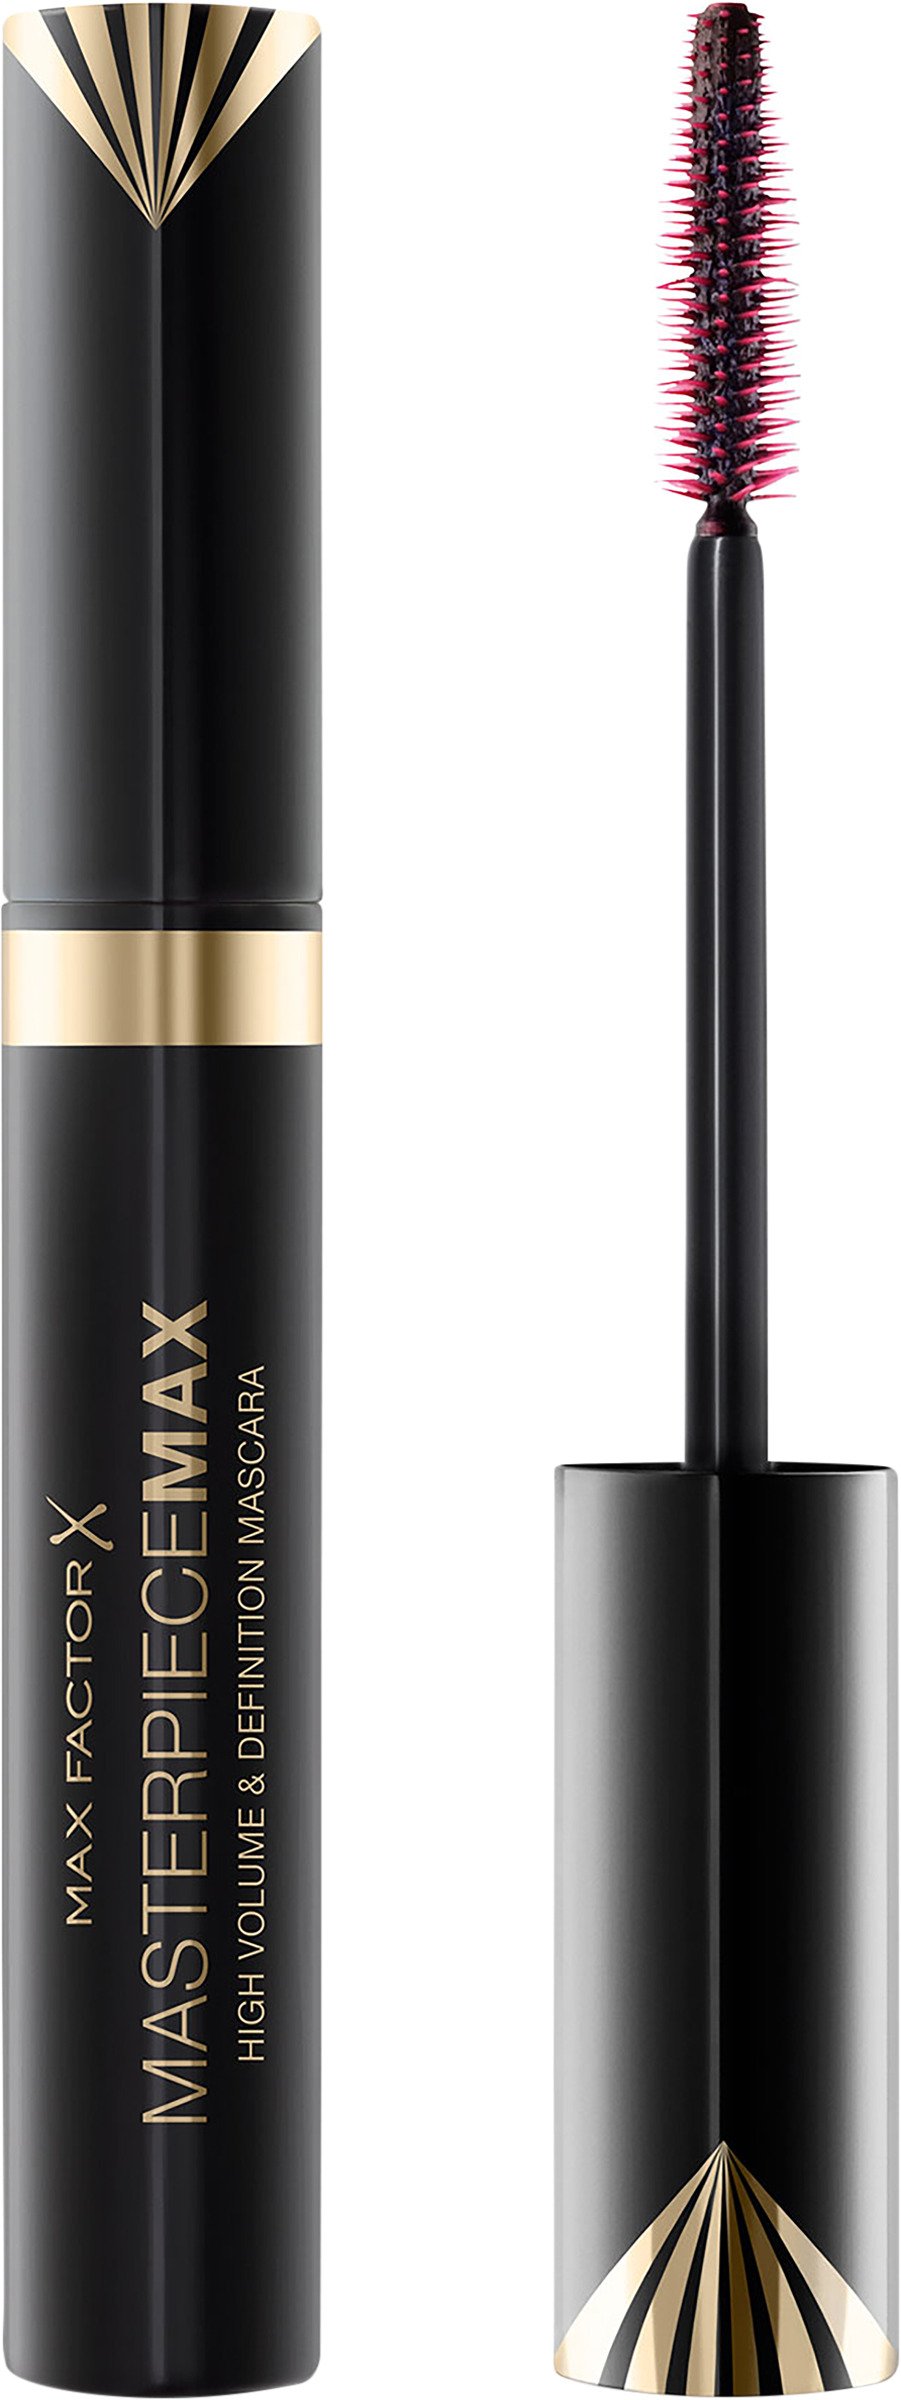 Max Factor Masterpiece Max Mascara 001 Black 7 ml